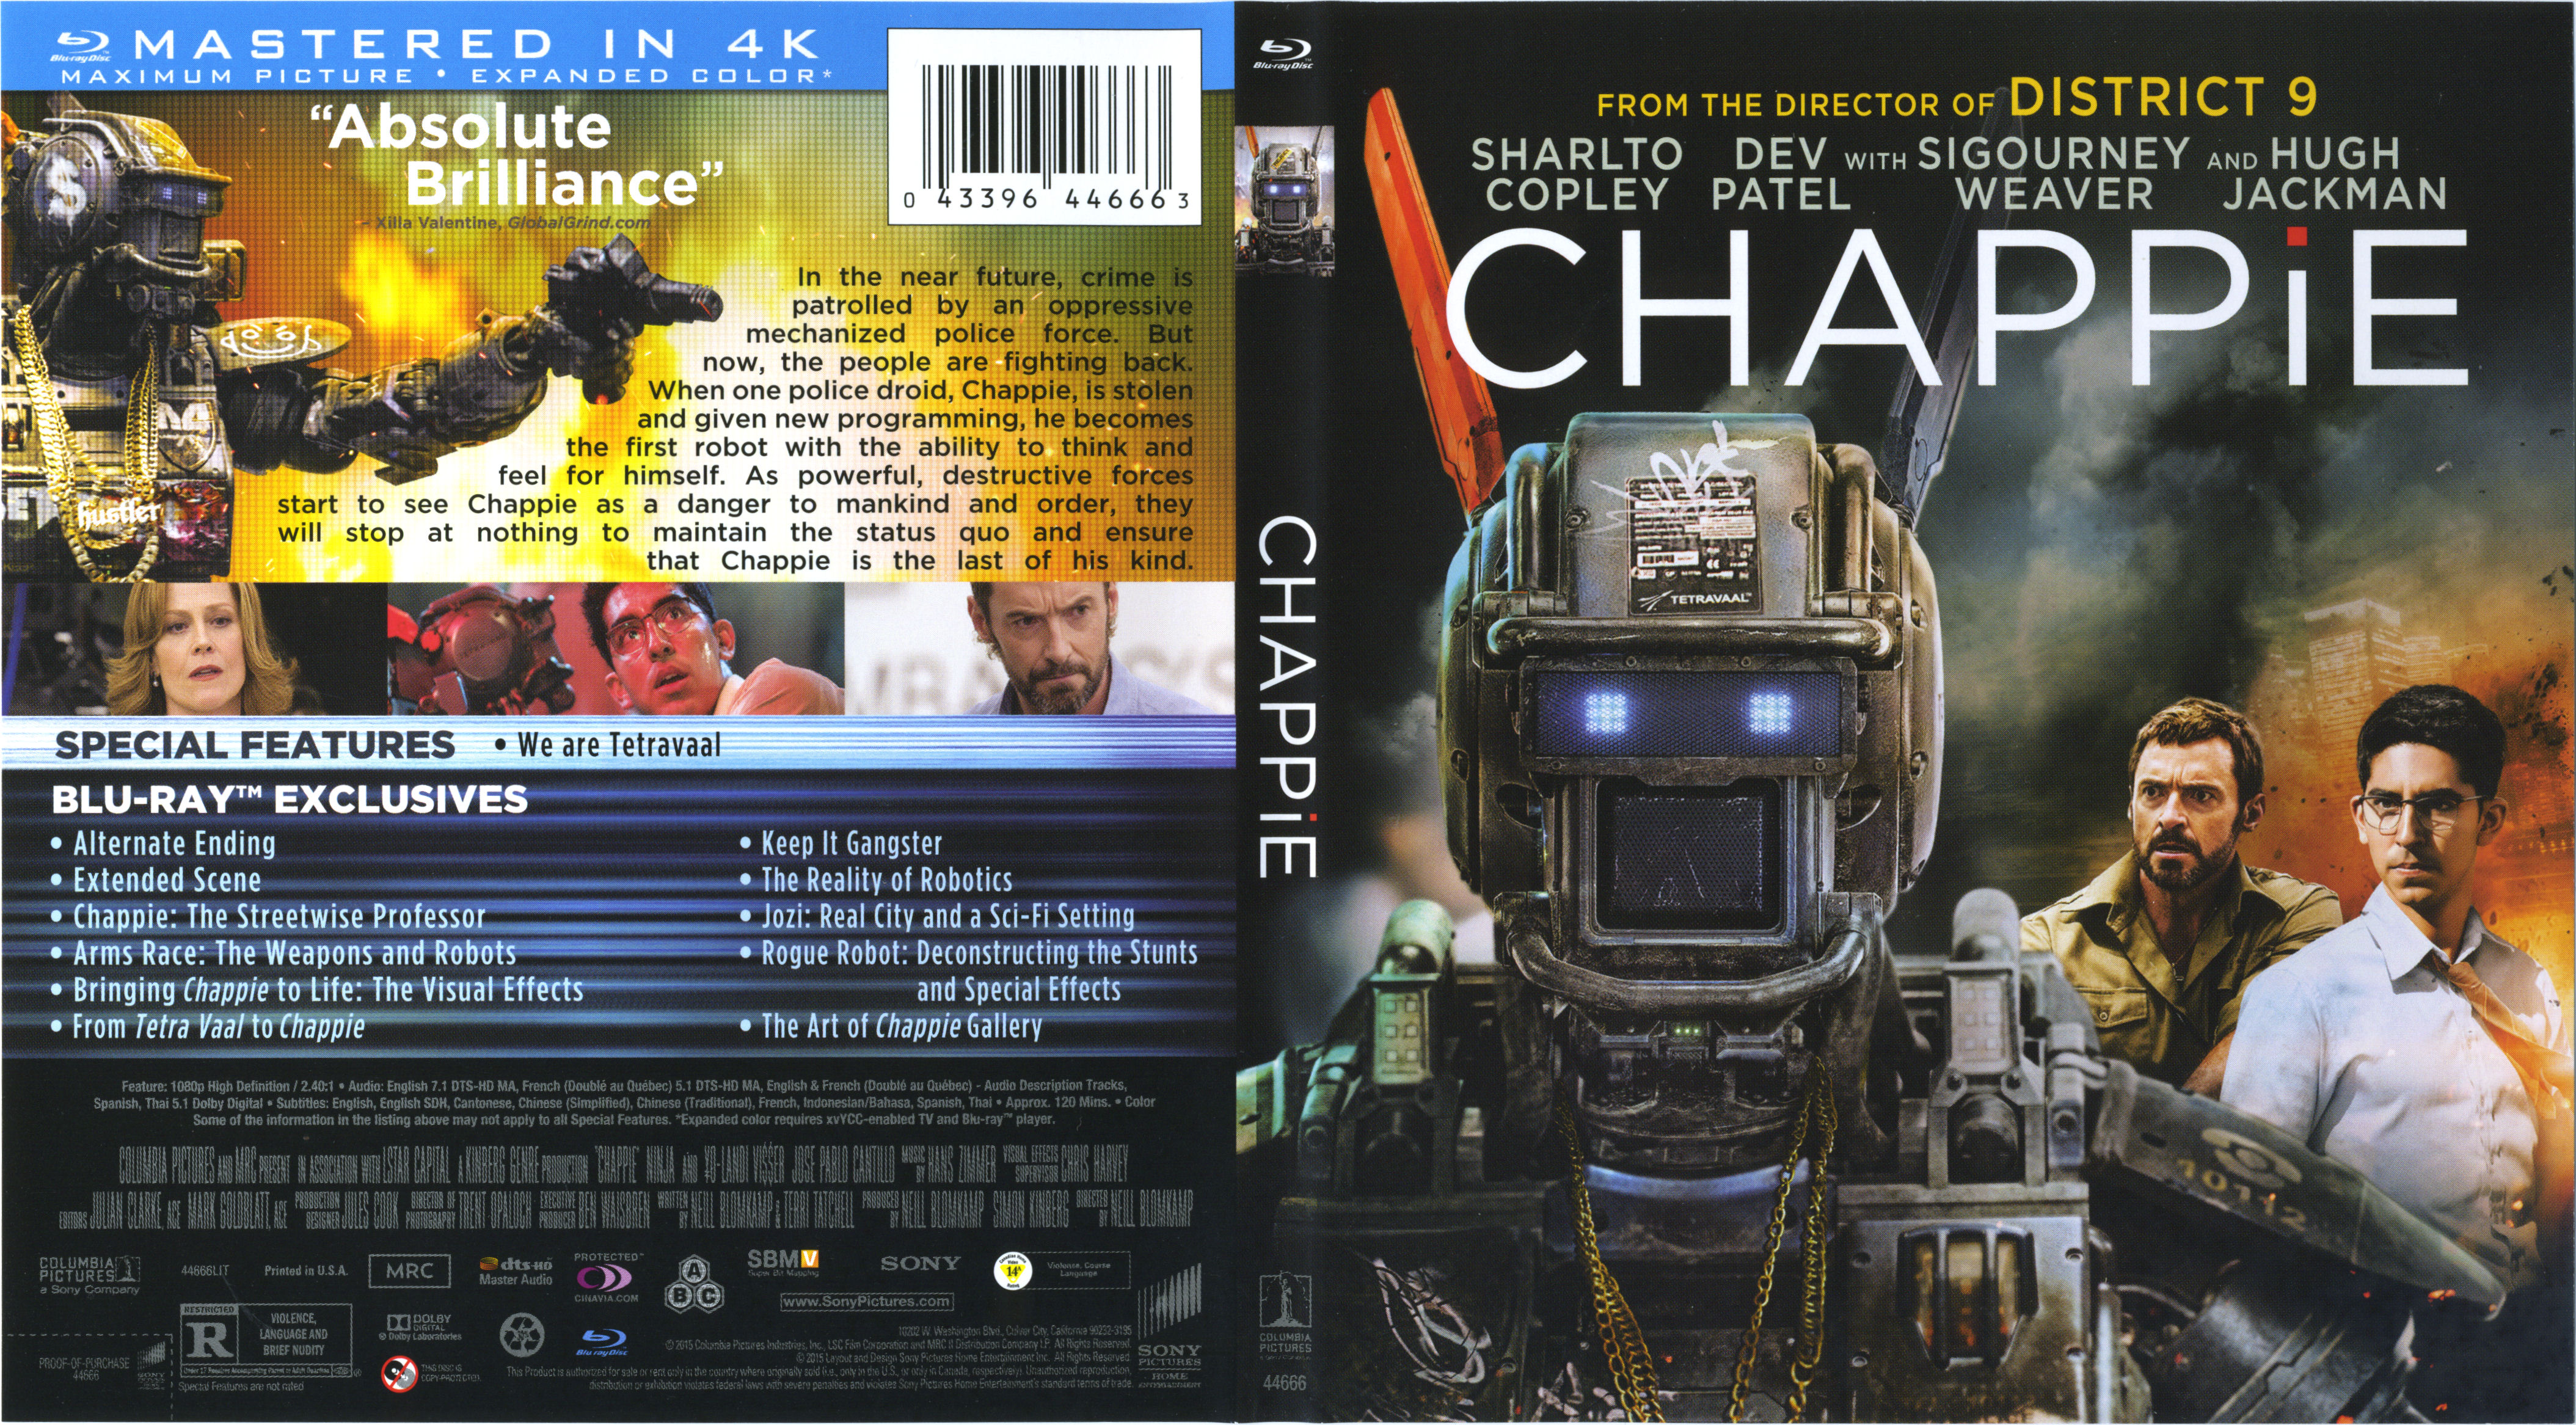 Jaquette DVD Chappie Zone 1 (BLU-RAY)